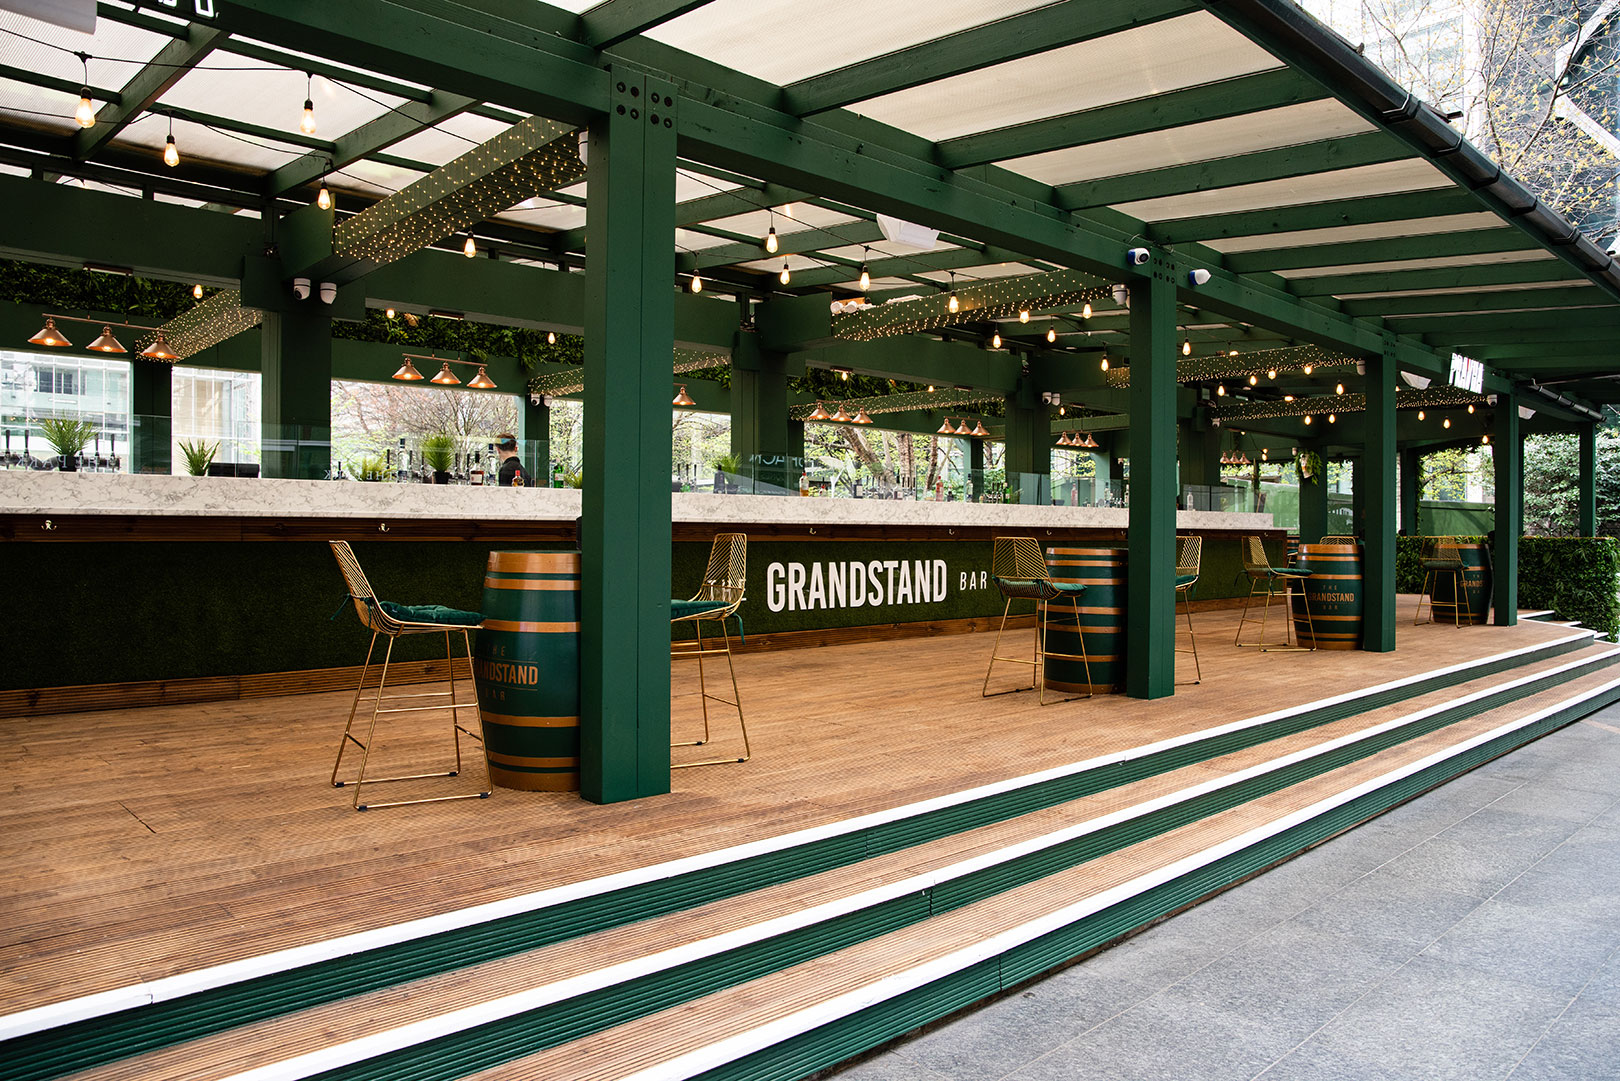 The Grandstand Bar. Summer Bar in Canary Wharf.